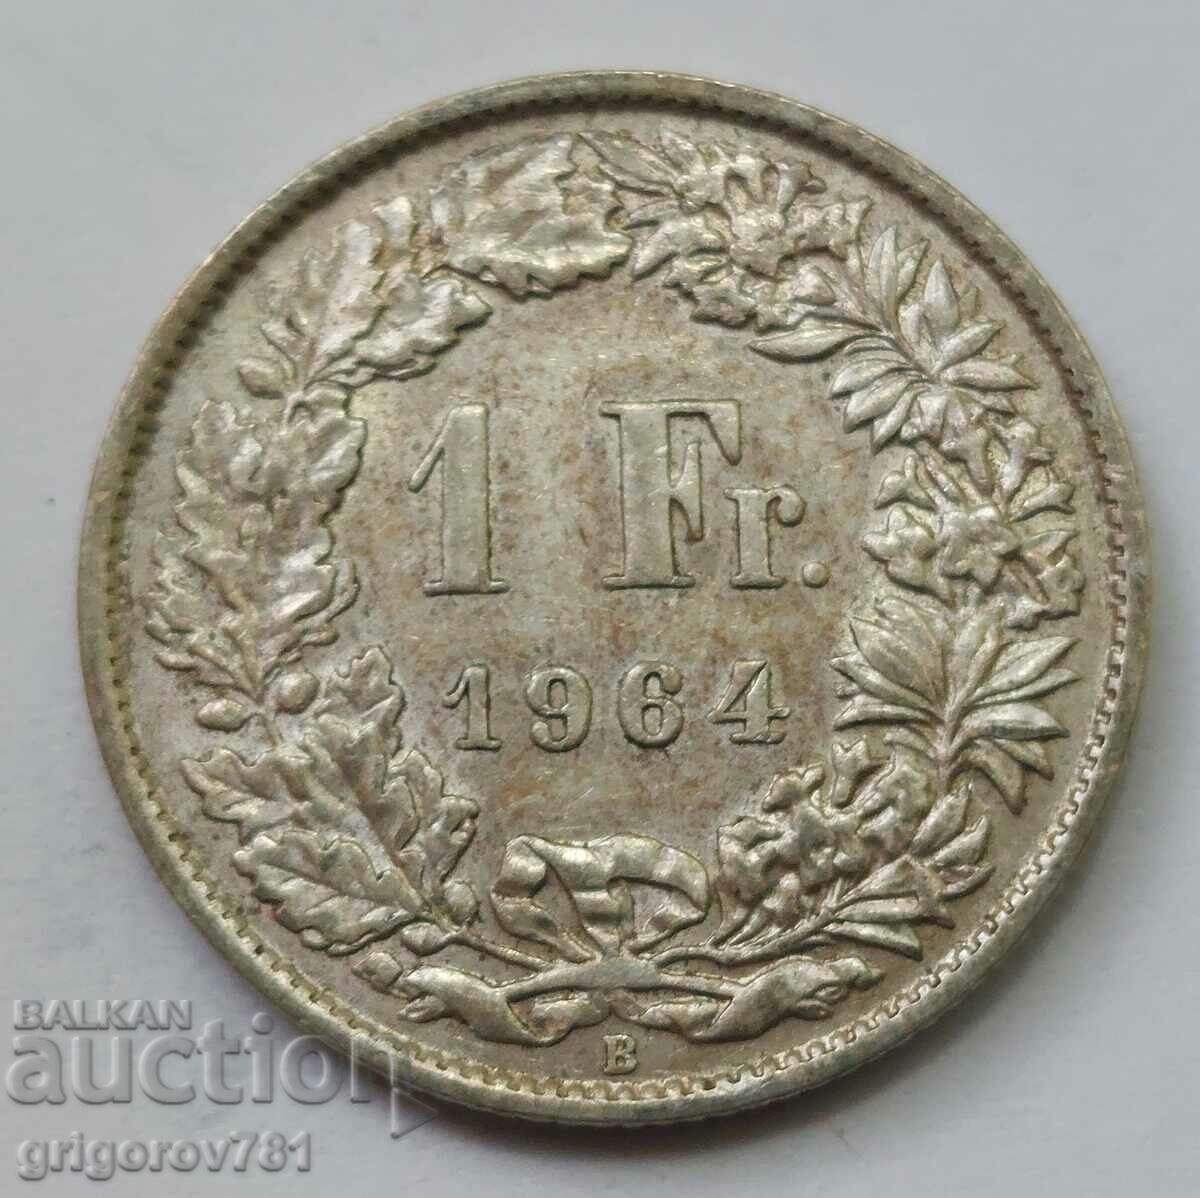 1 Franc Argint Elveția 1964 B - Monedă de argint #37